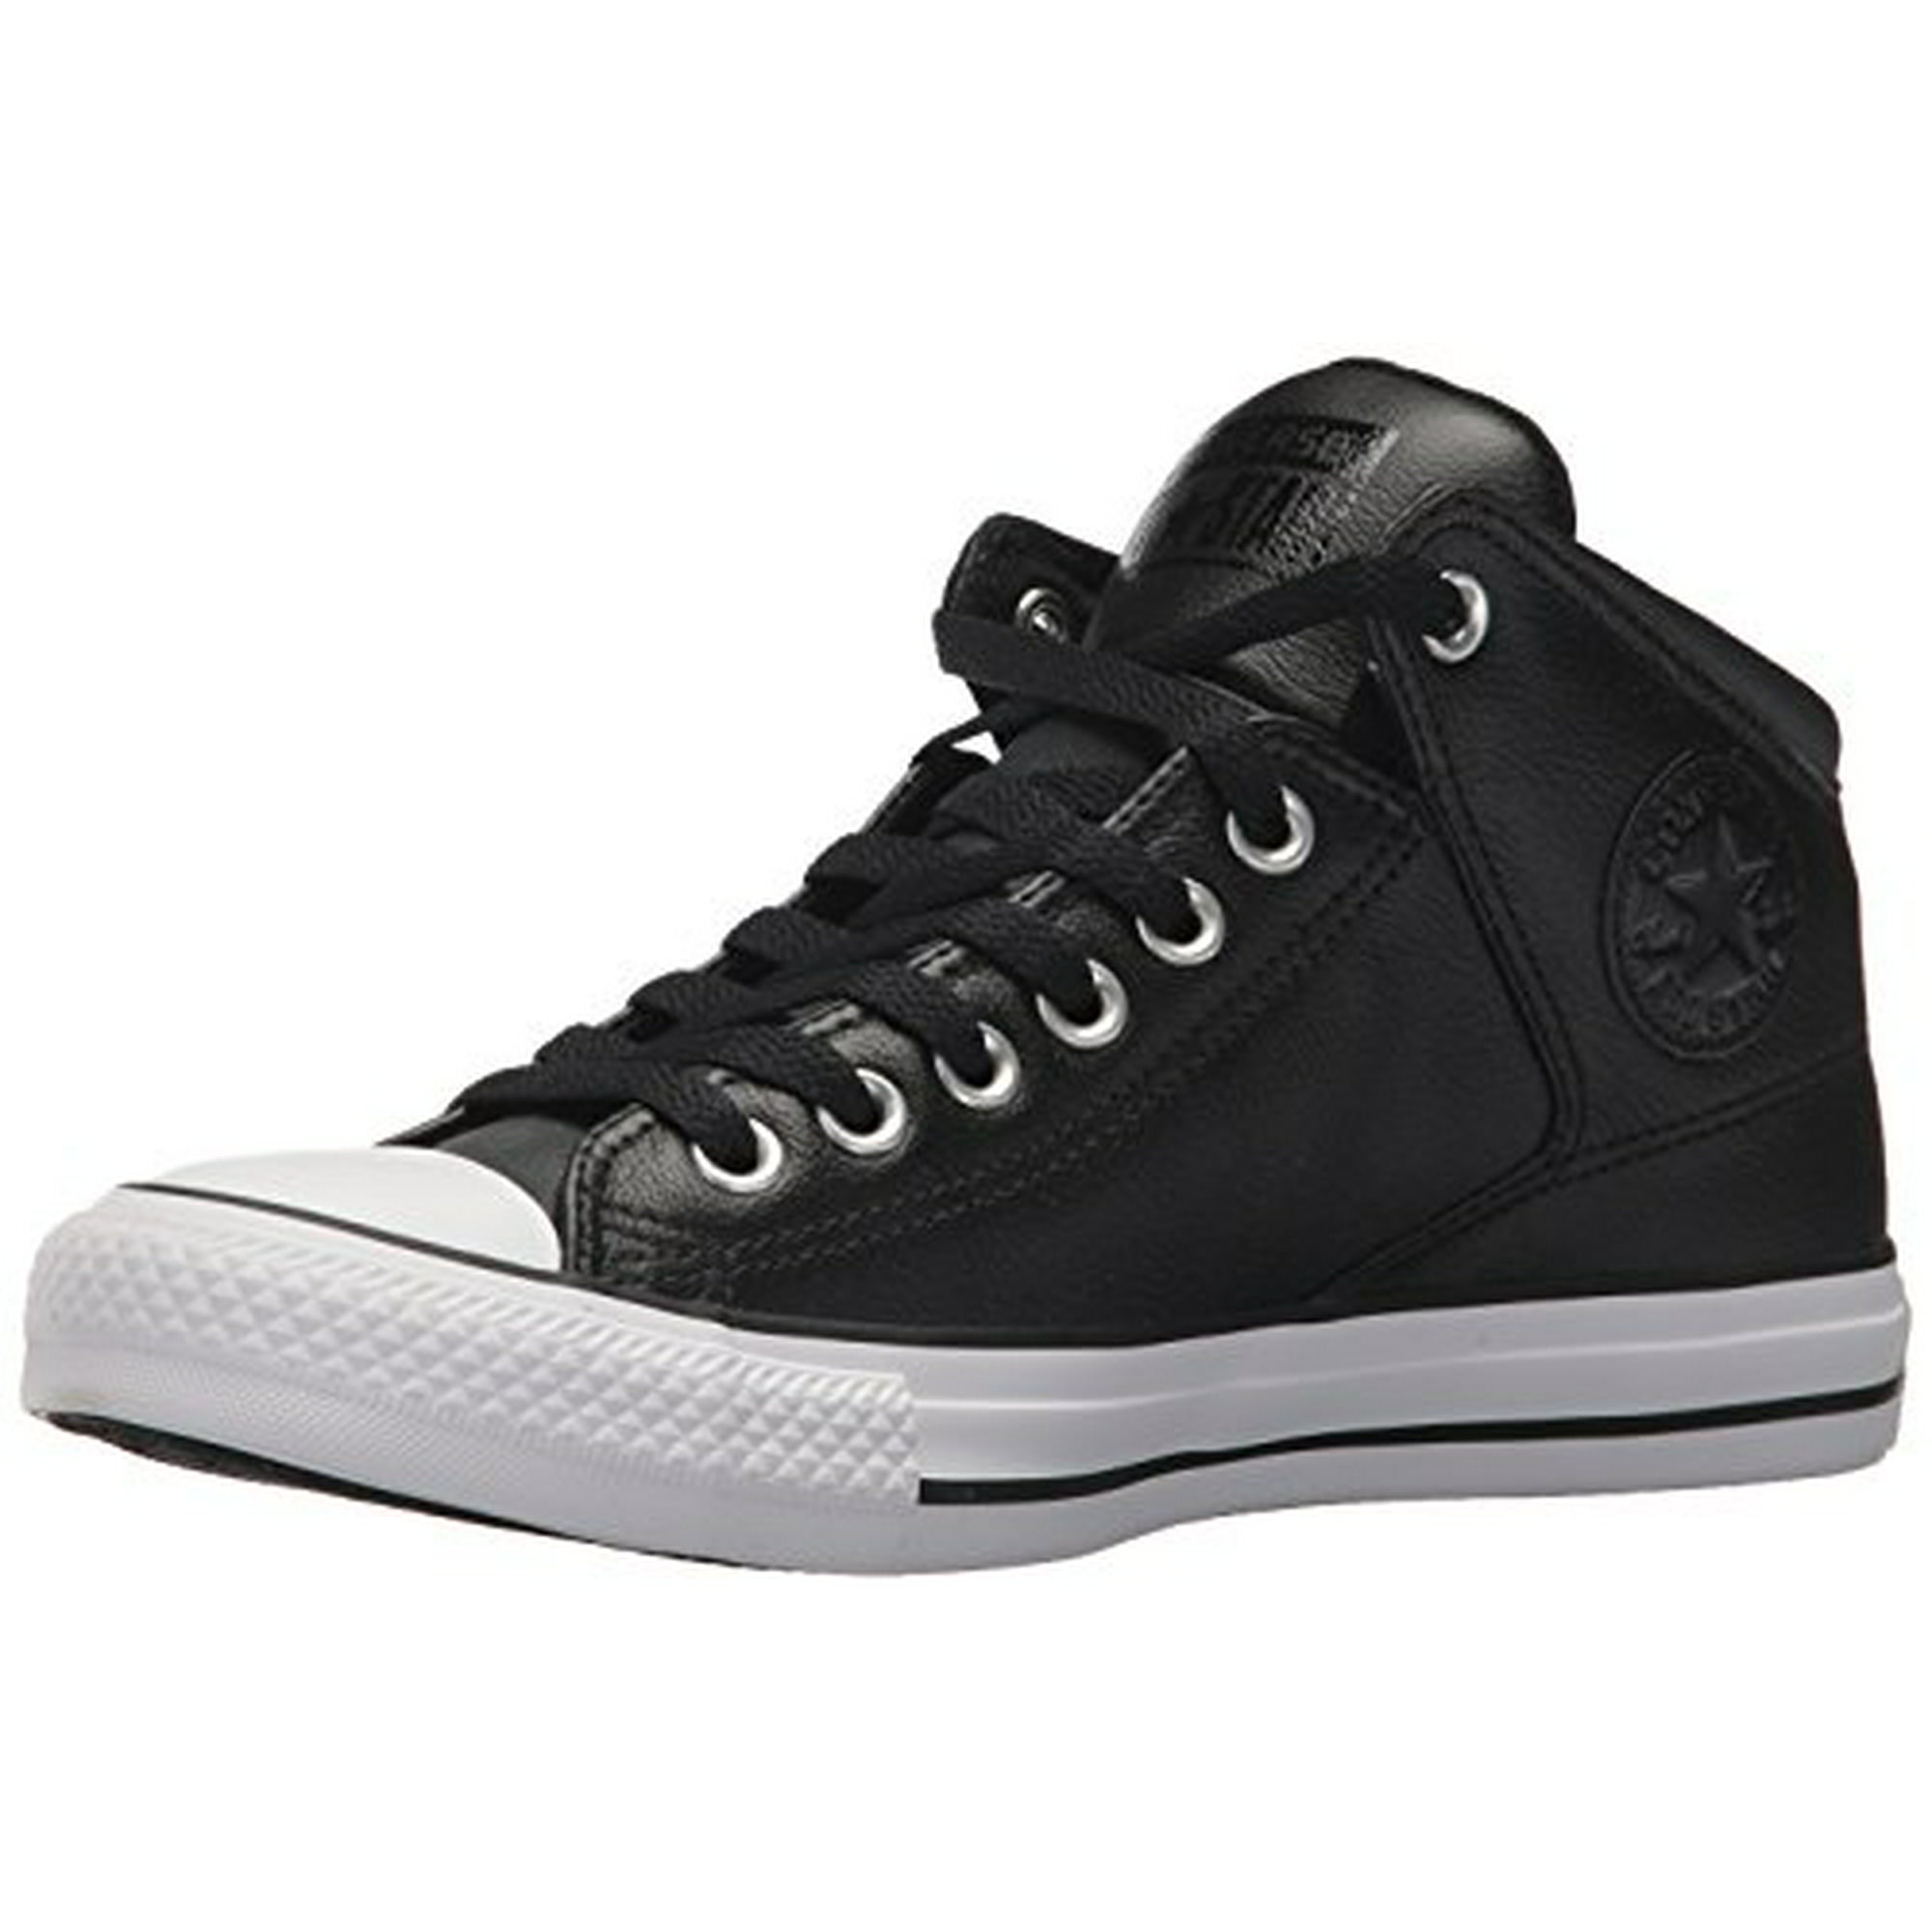 Men's Street Leather Shoe, Black/Black/White, 7.5 M - Walmart.com